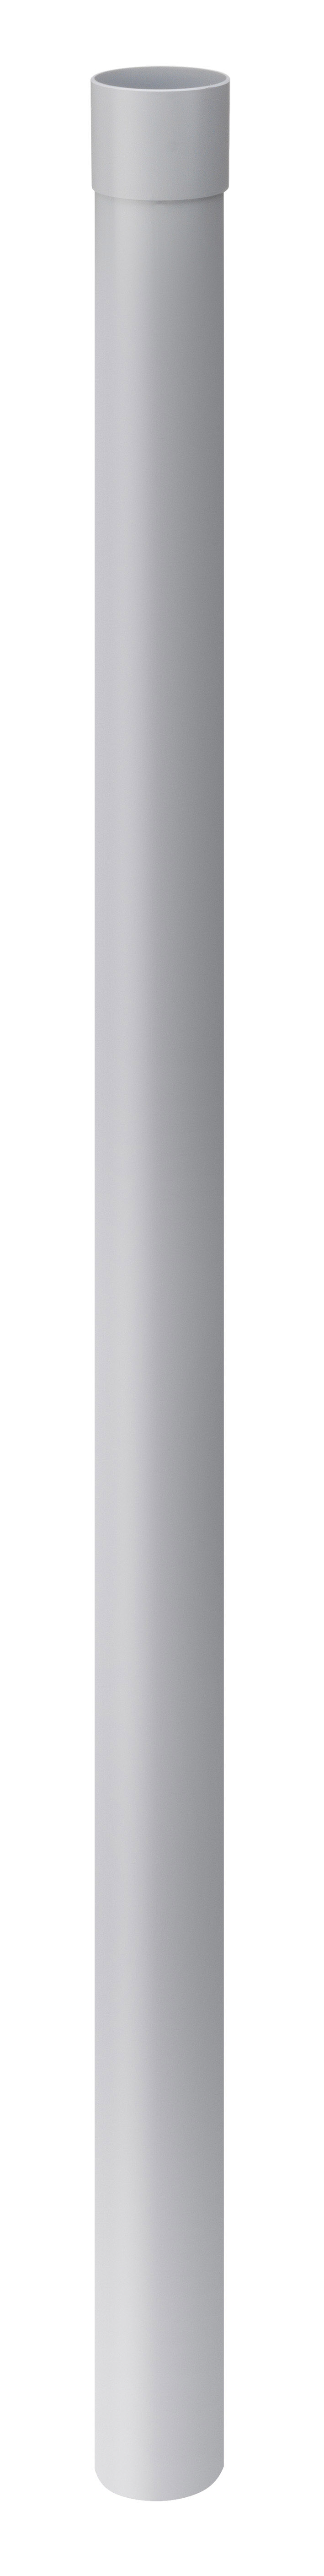 Inefa-Fallrohr NW 50 - 2 m grau 81115 incl. Muffe